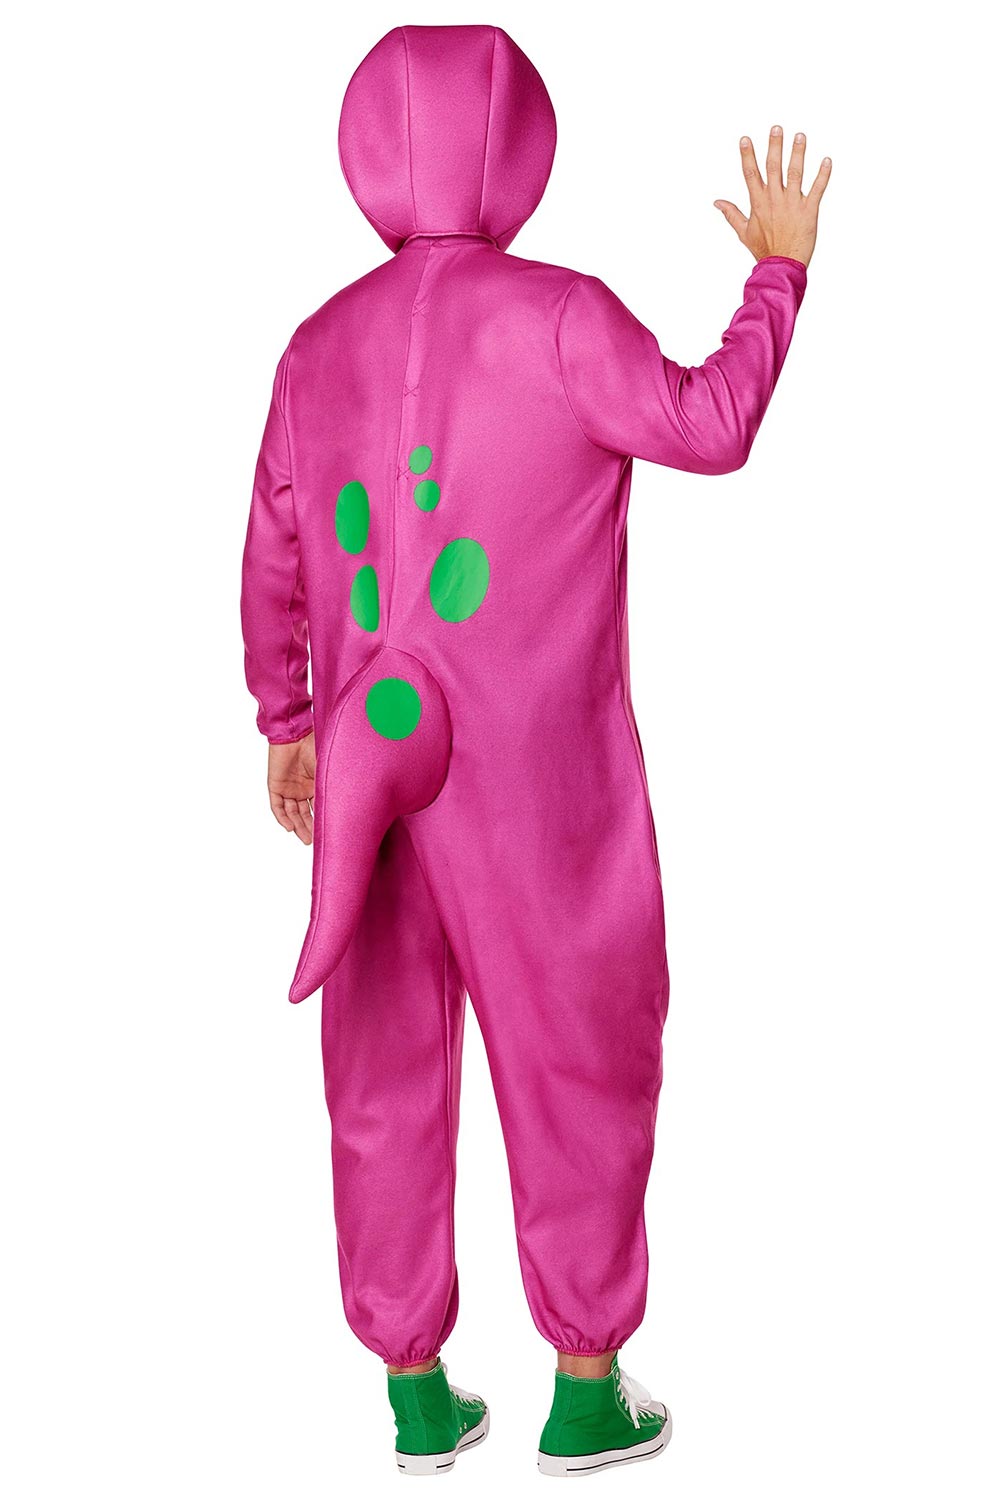 Adult Barney Mens Halloween Costume size Medium - image 2 of 2